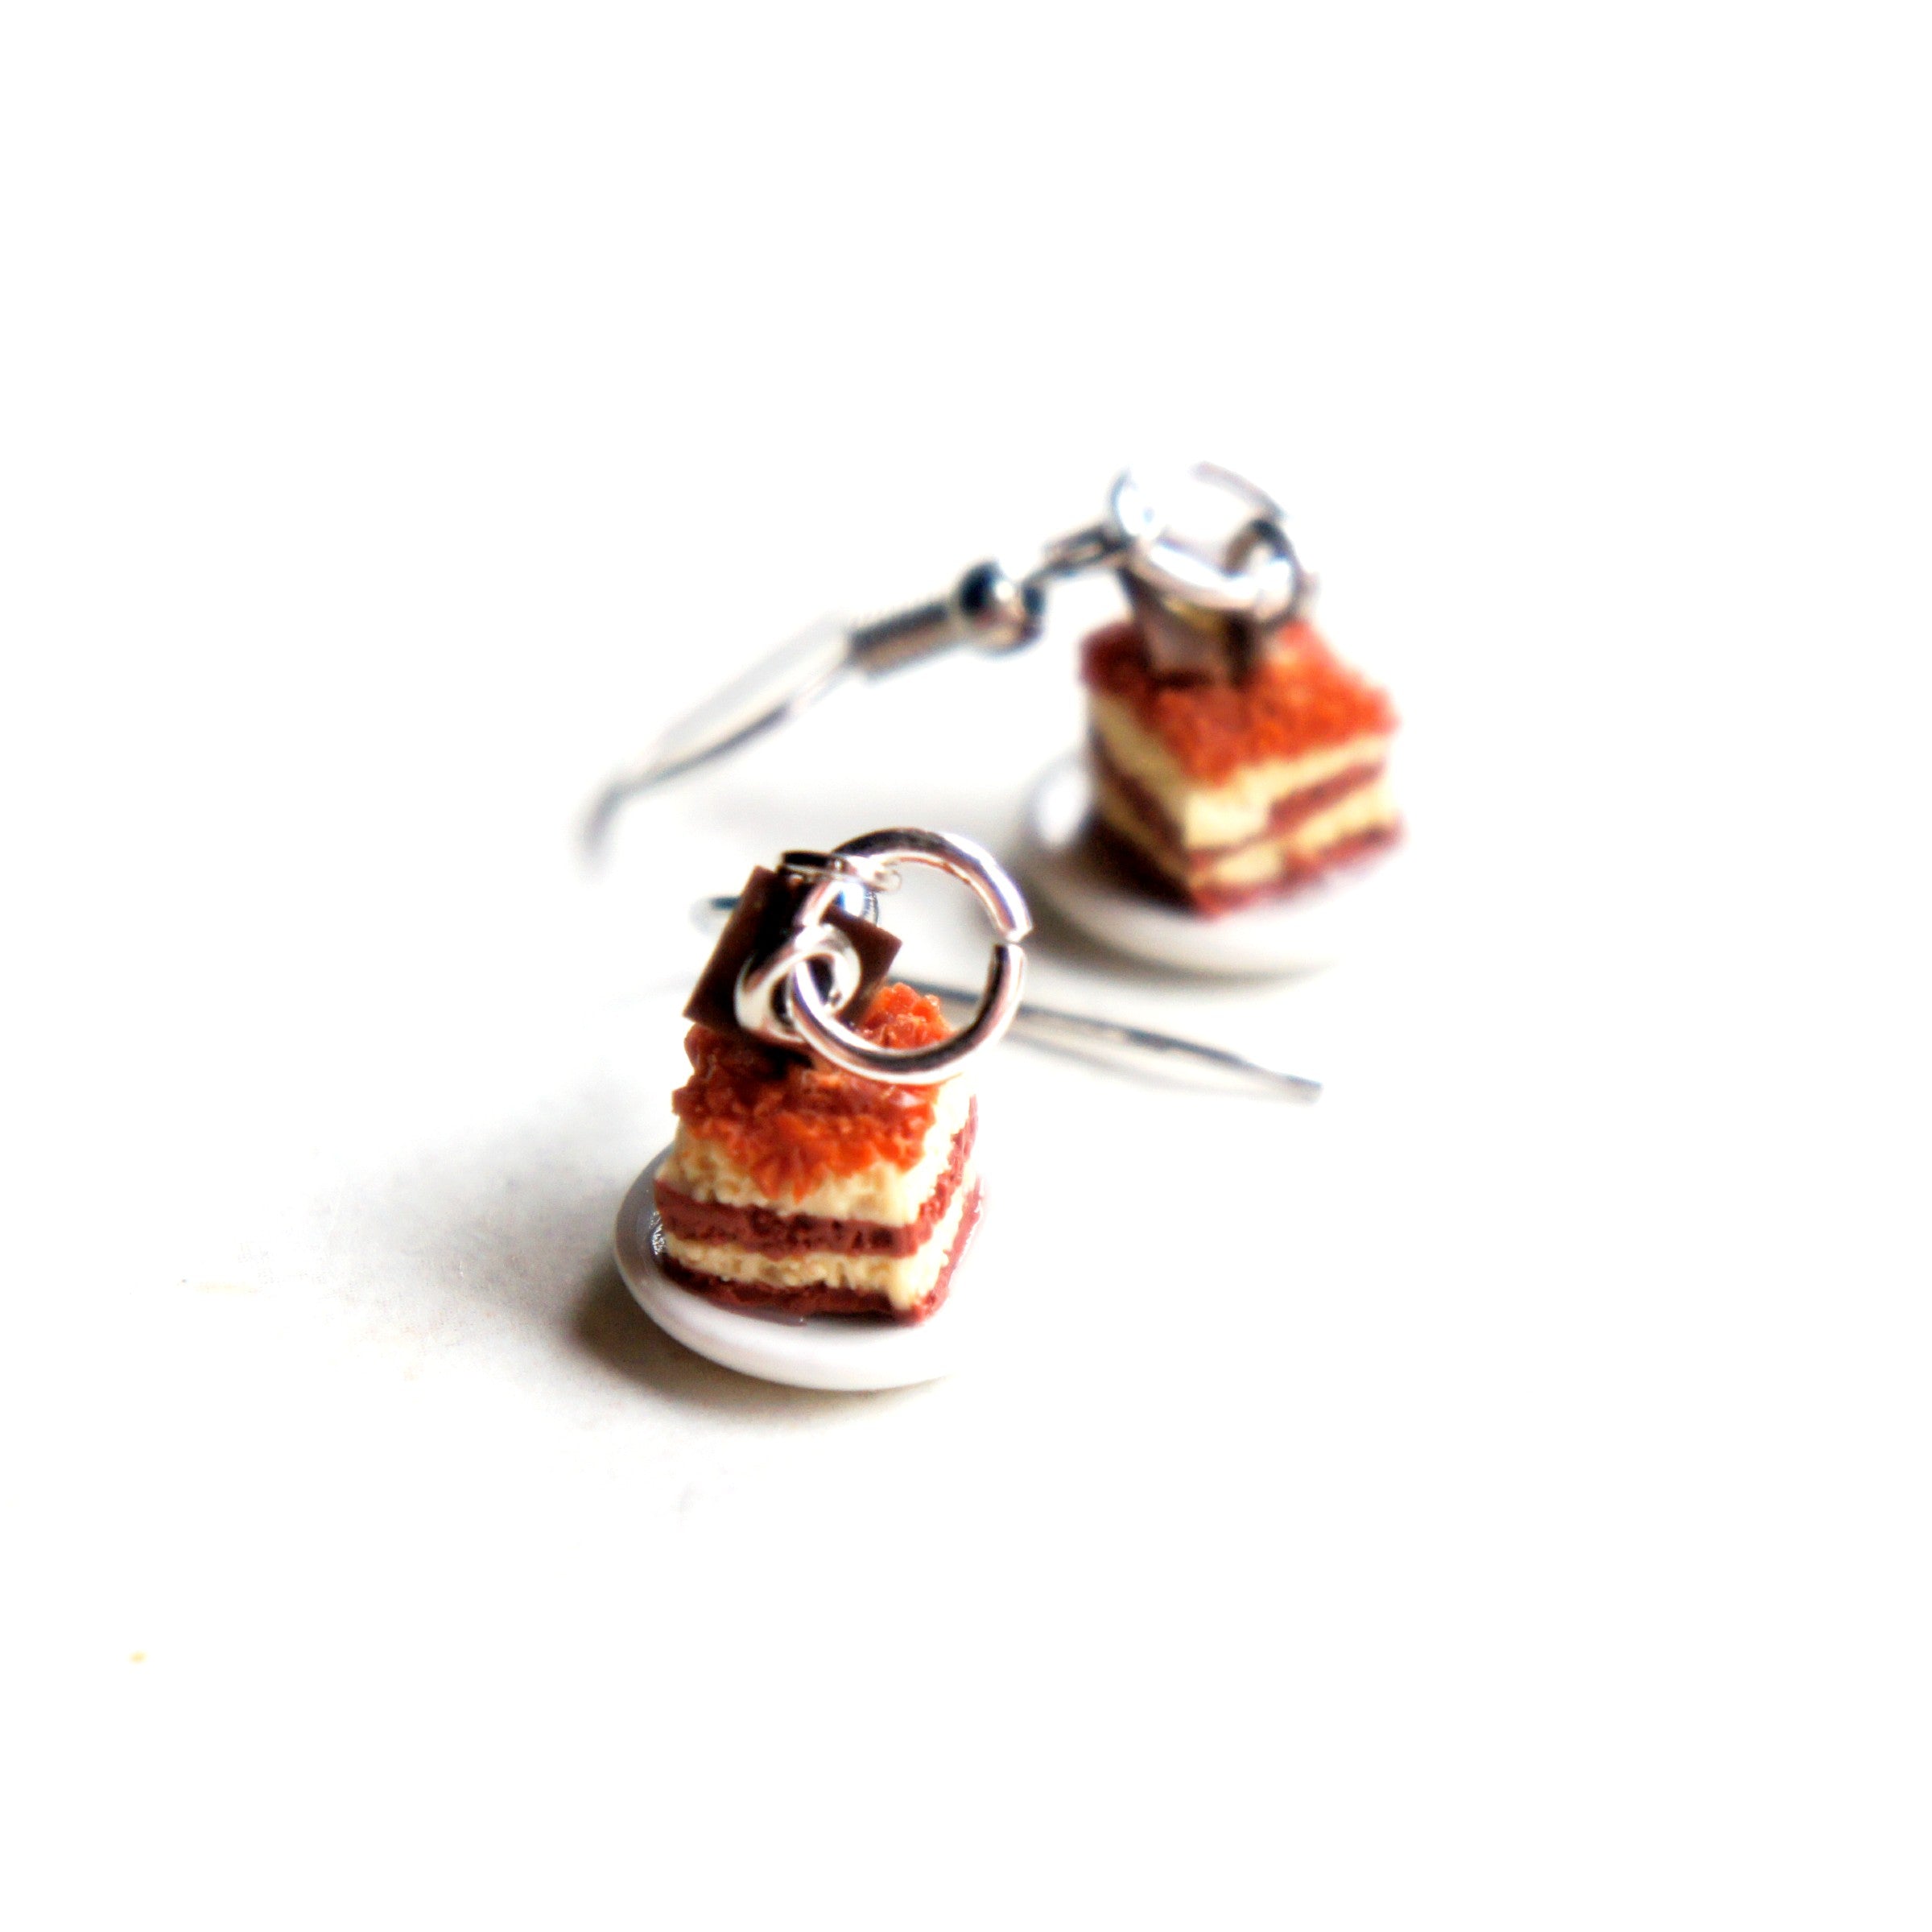 Tiramisu Dangle Earrings - Jillicious charms and accessories